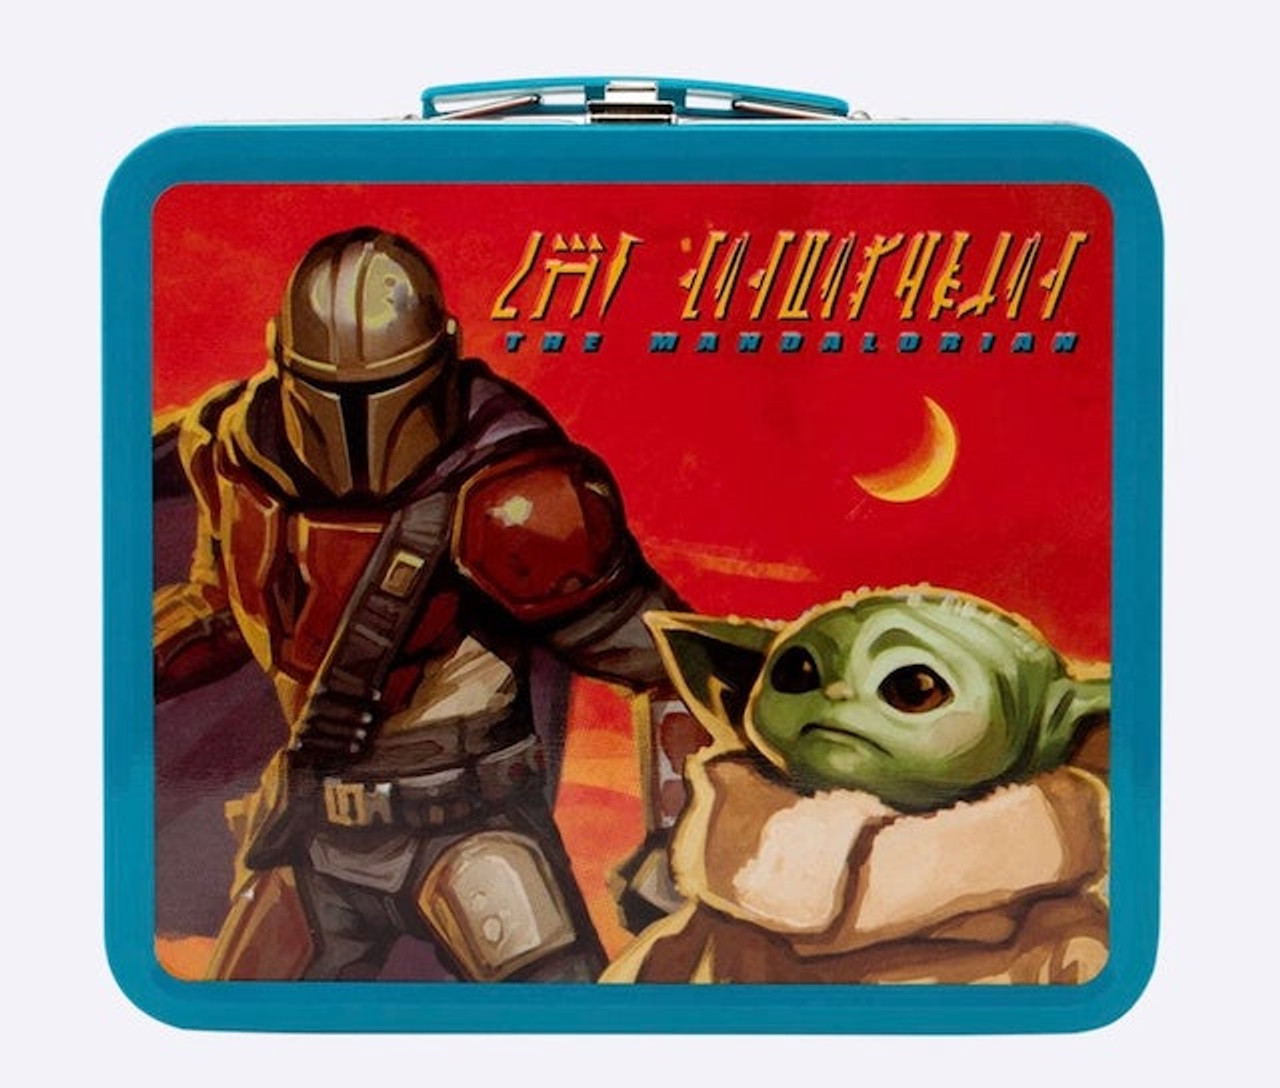 Star Wars: The Mandalorian Childrens/Kids Lunch Box Set